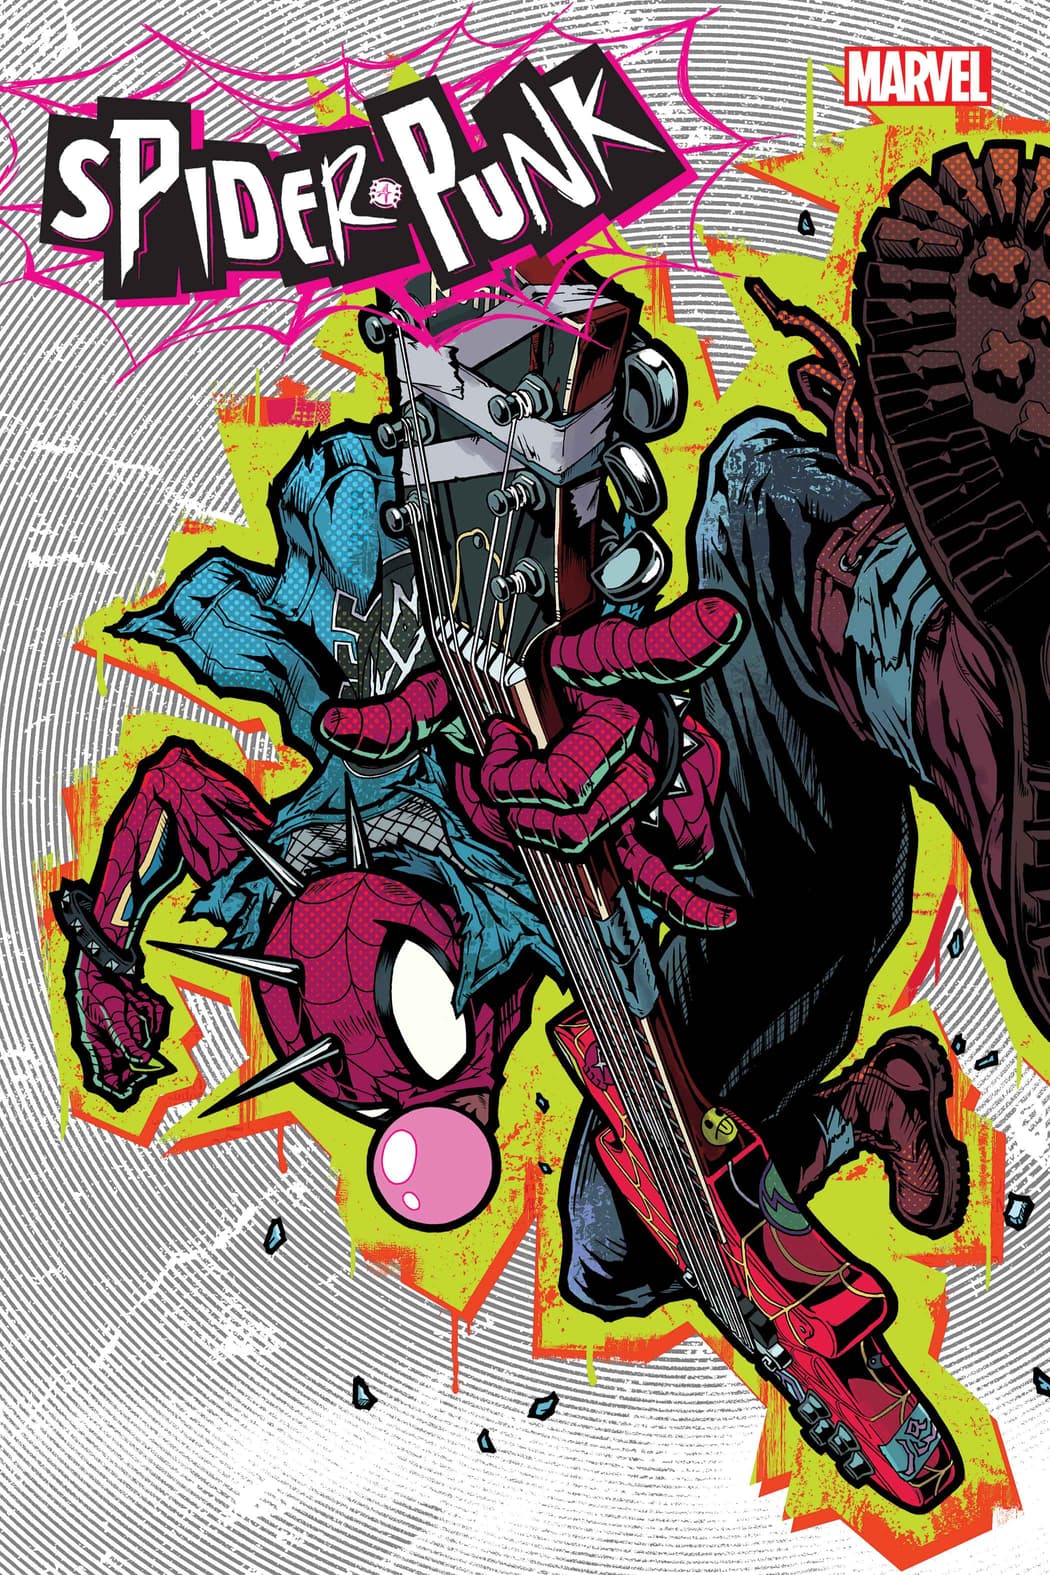 Marvel Announces Spider-Man Spinoff Starring Spider-Punk